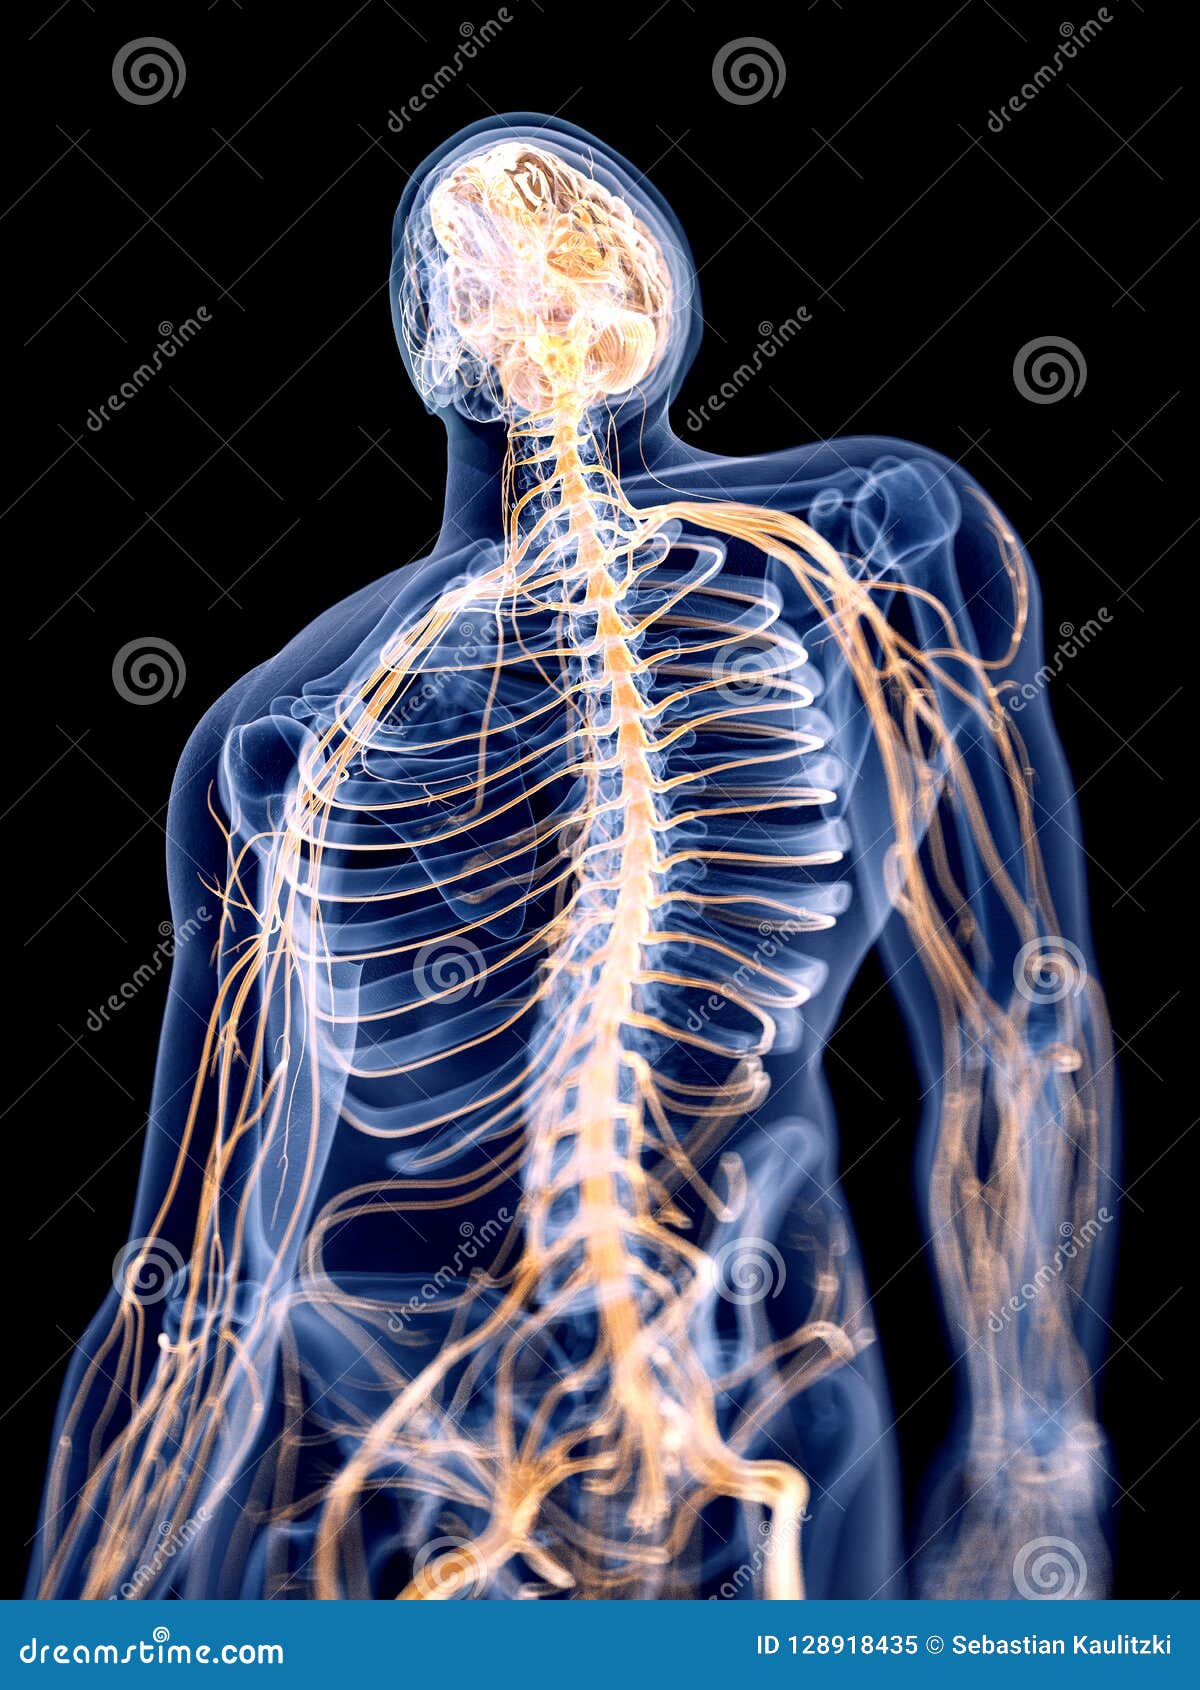 Human Nervous System Medical Vector Illustration Diagram With